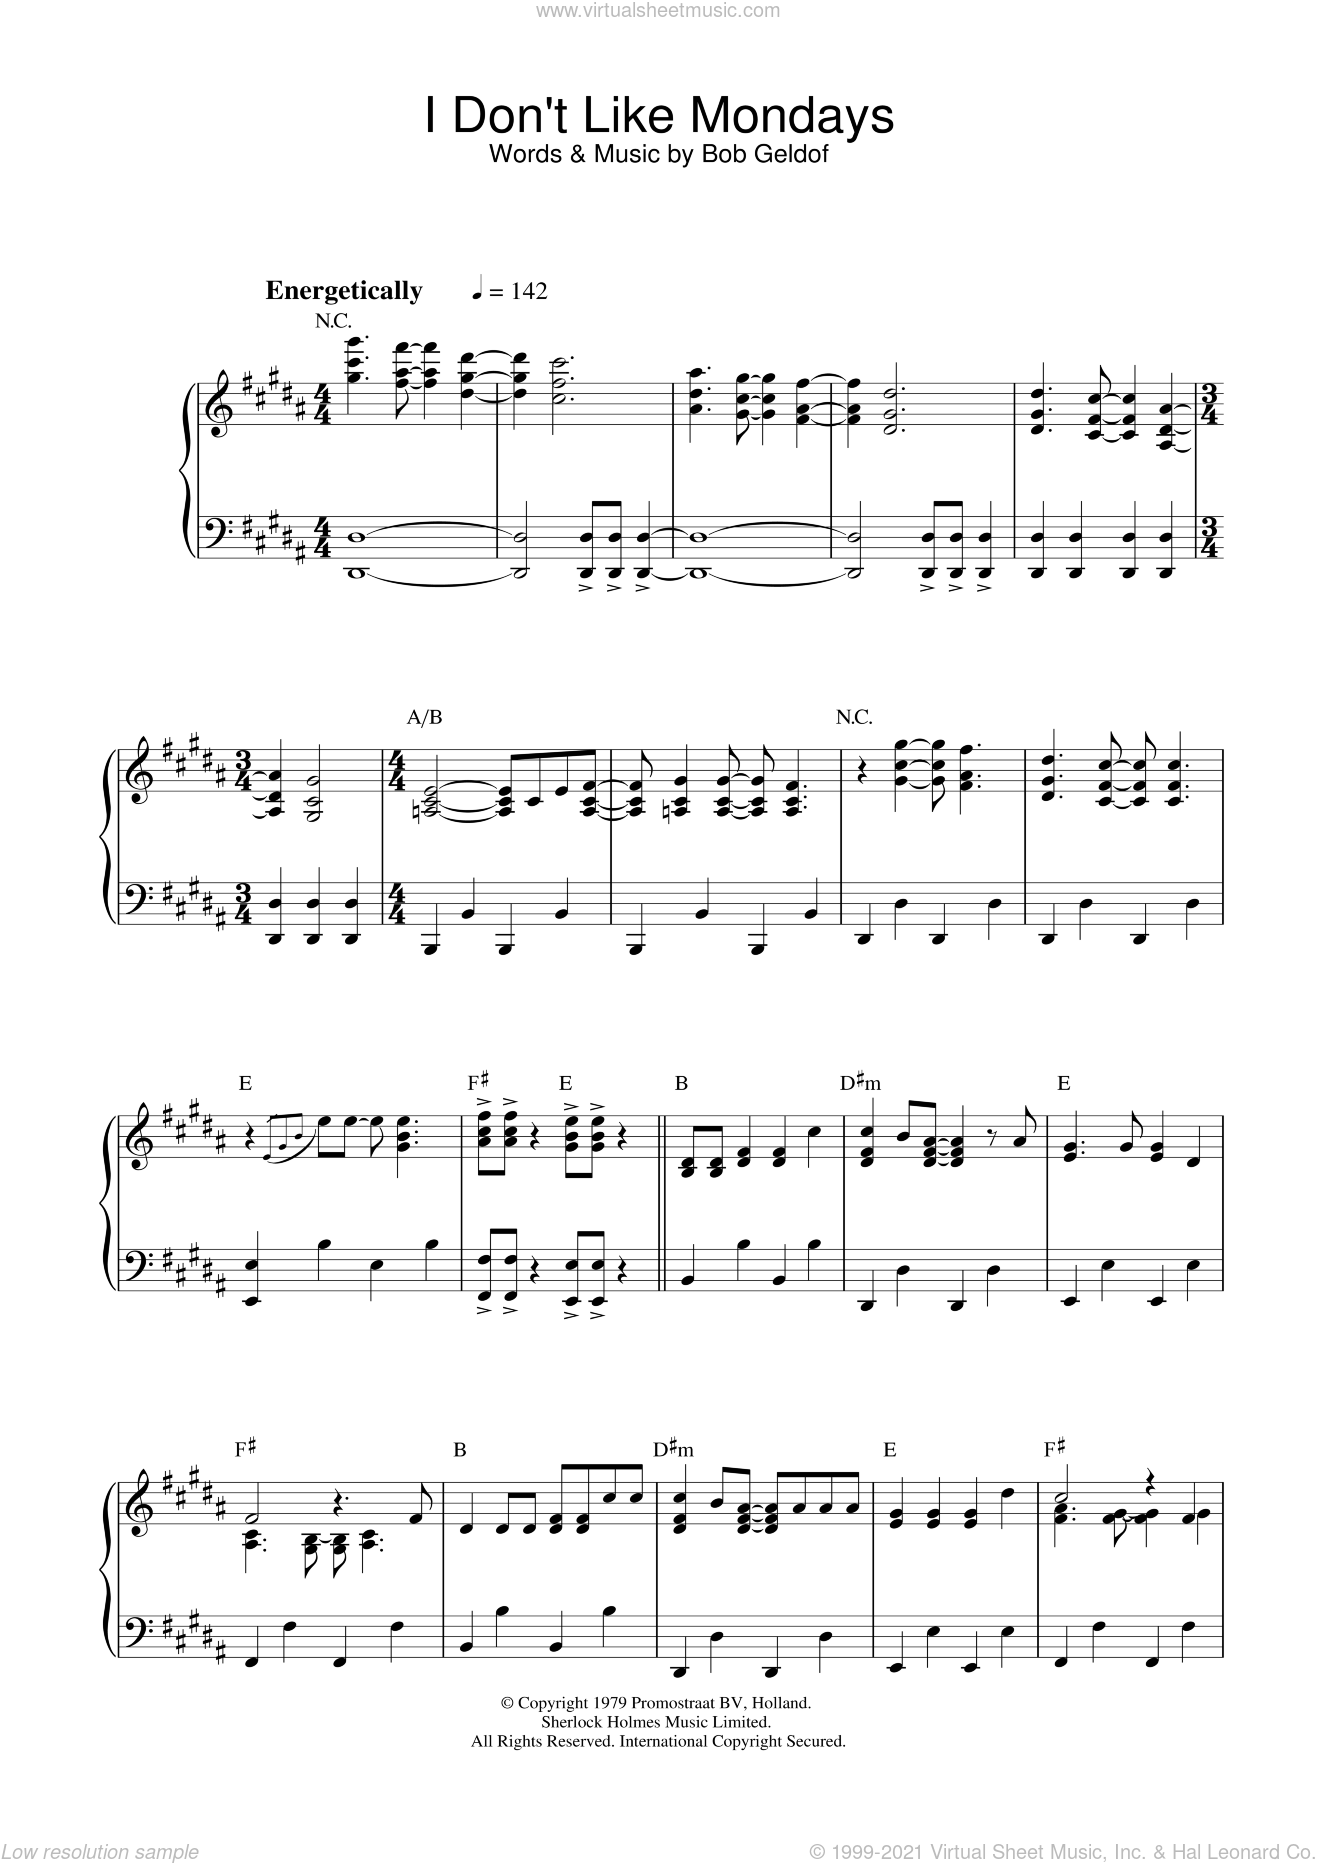 Rats - I Don't Like Mondays sheet music for piano solo PDF